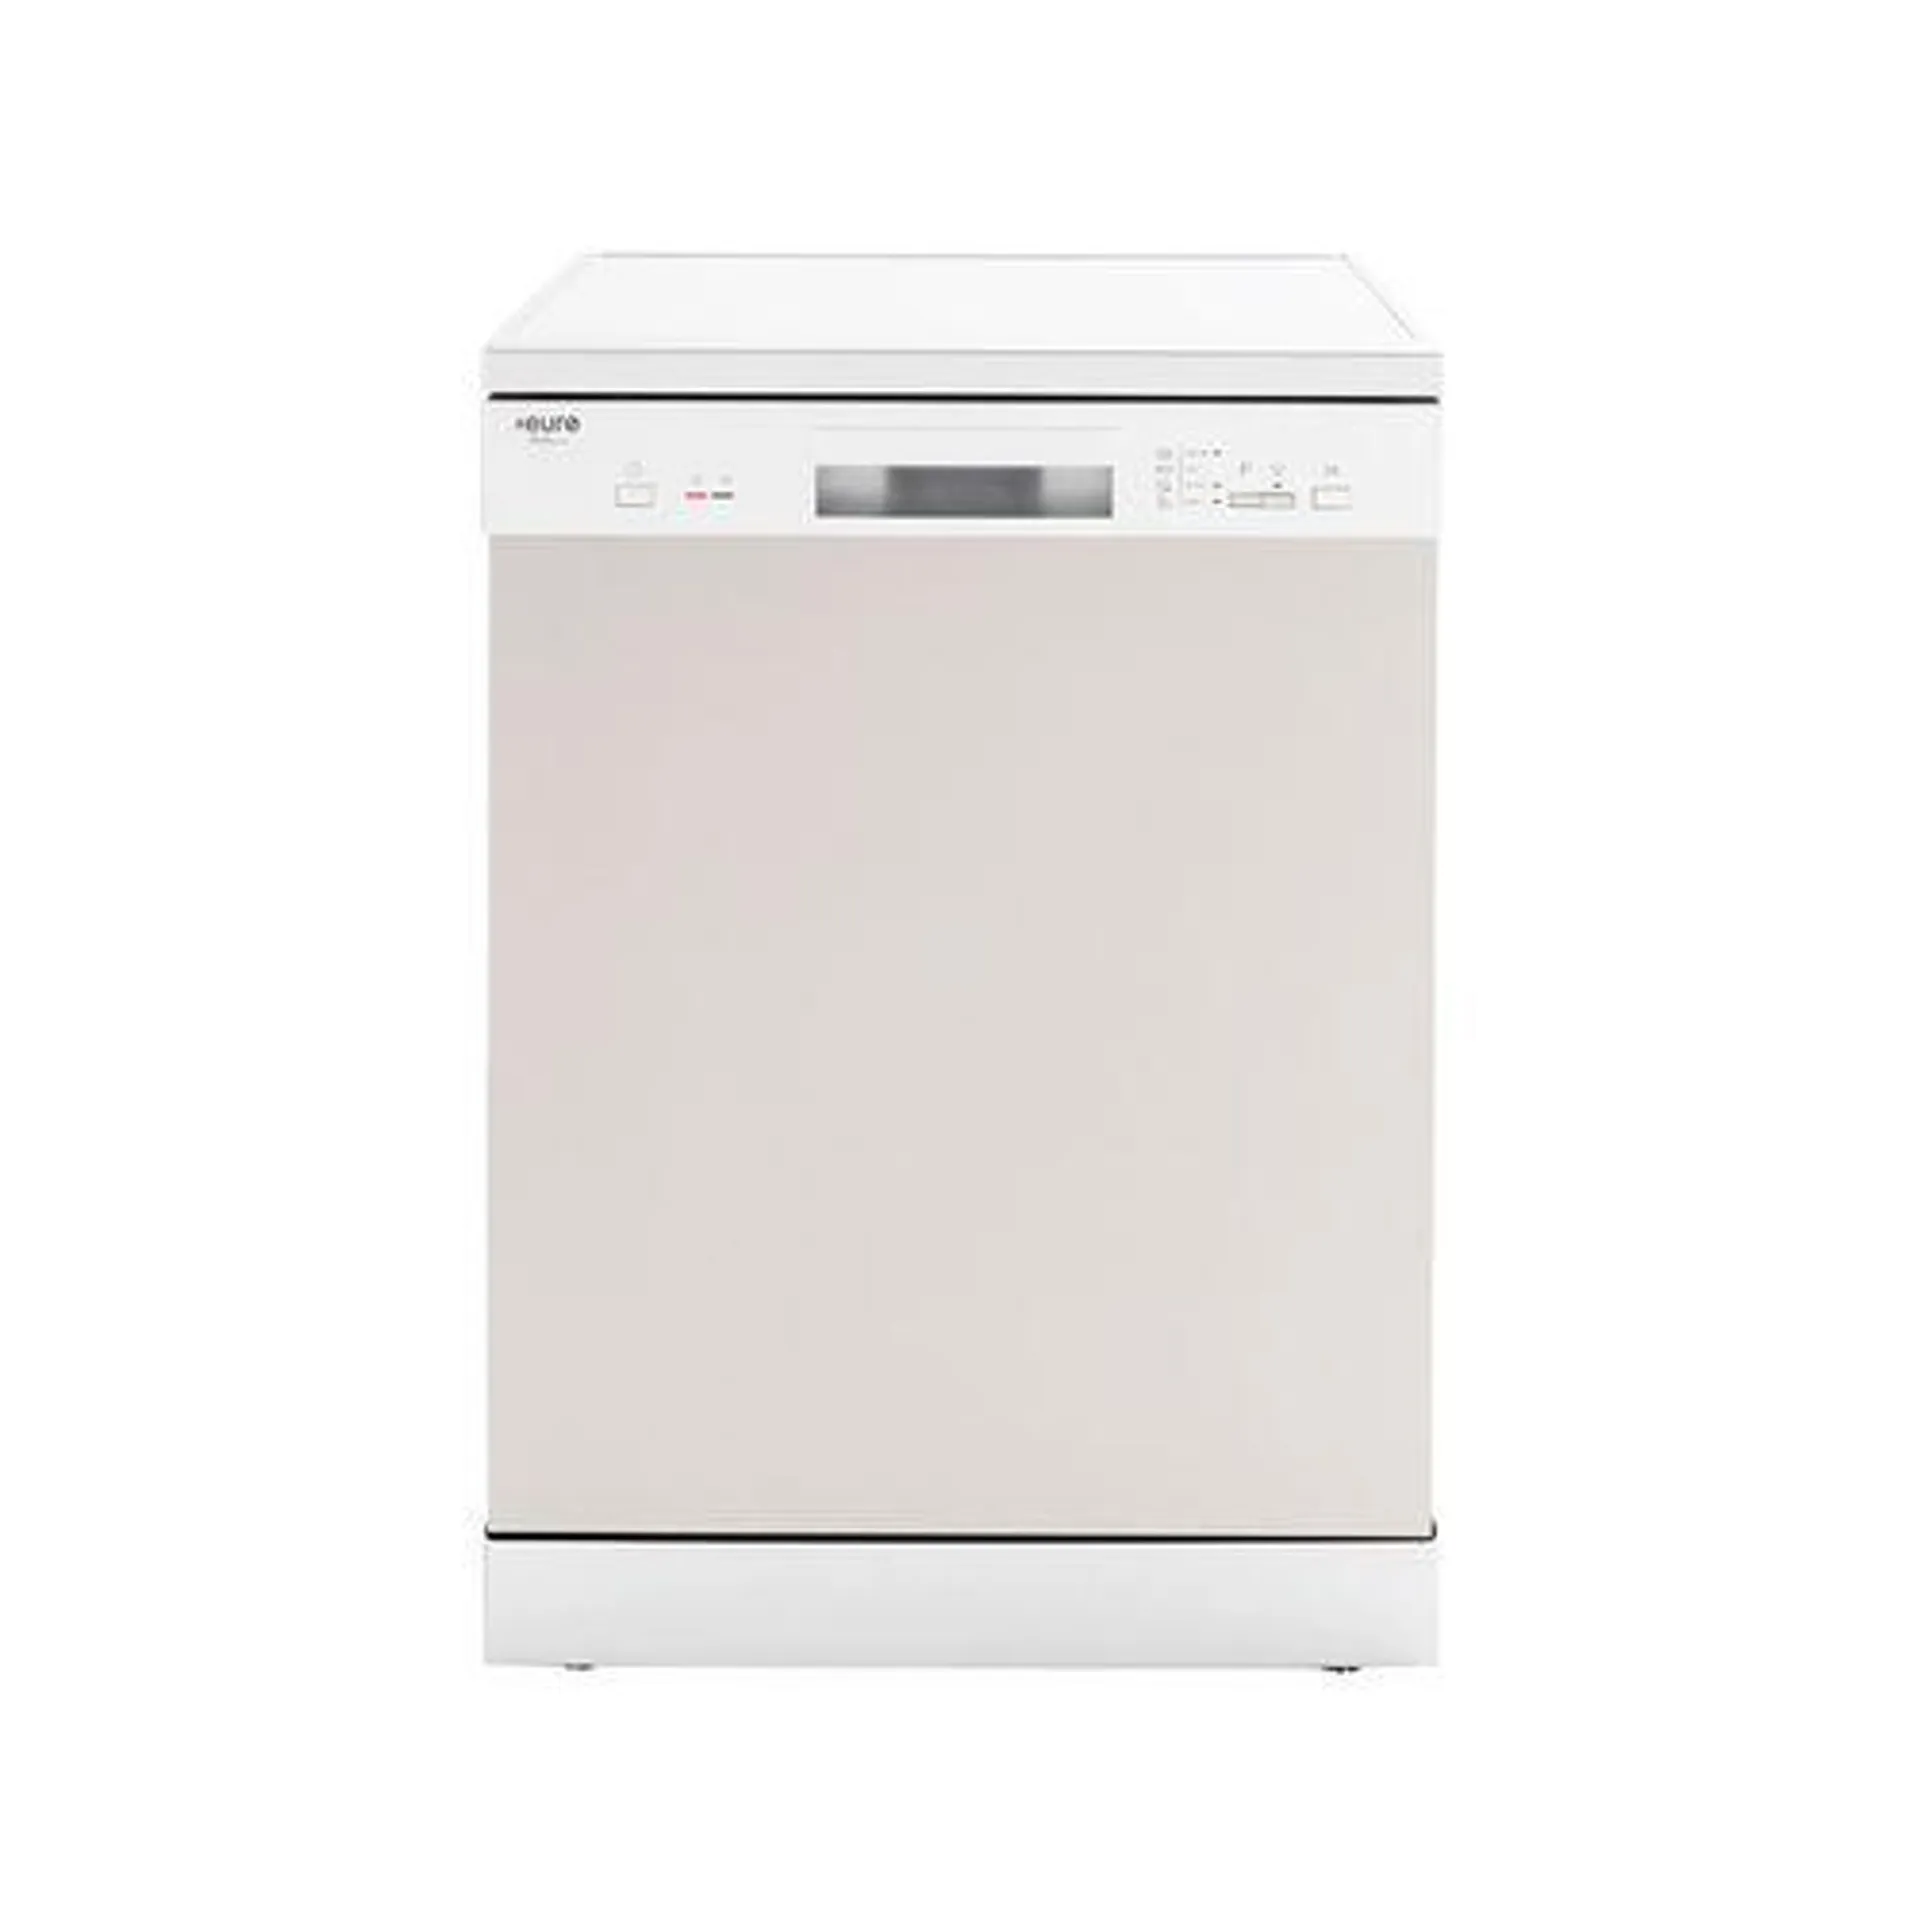 Euro 60cm 4 Cycle Dishwasher WELS 4.5 Star 10.2L/W